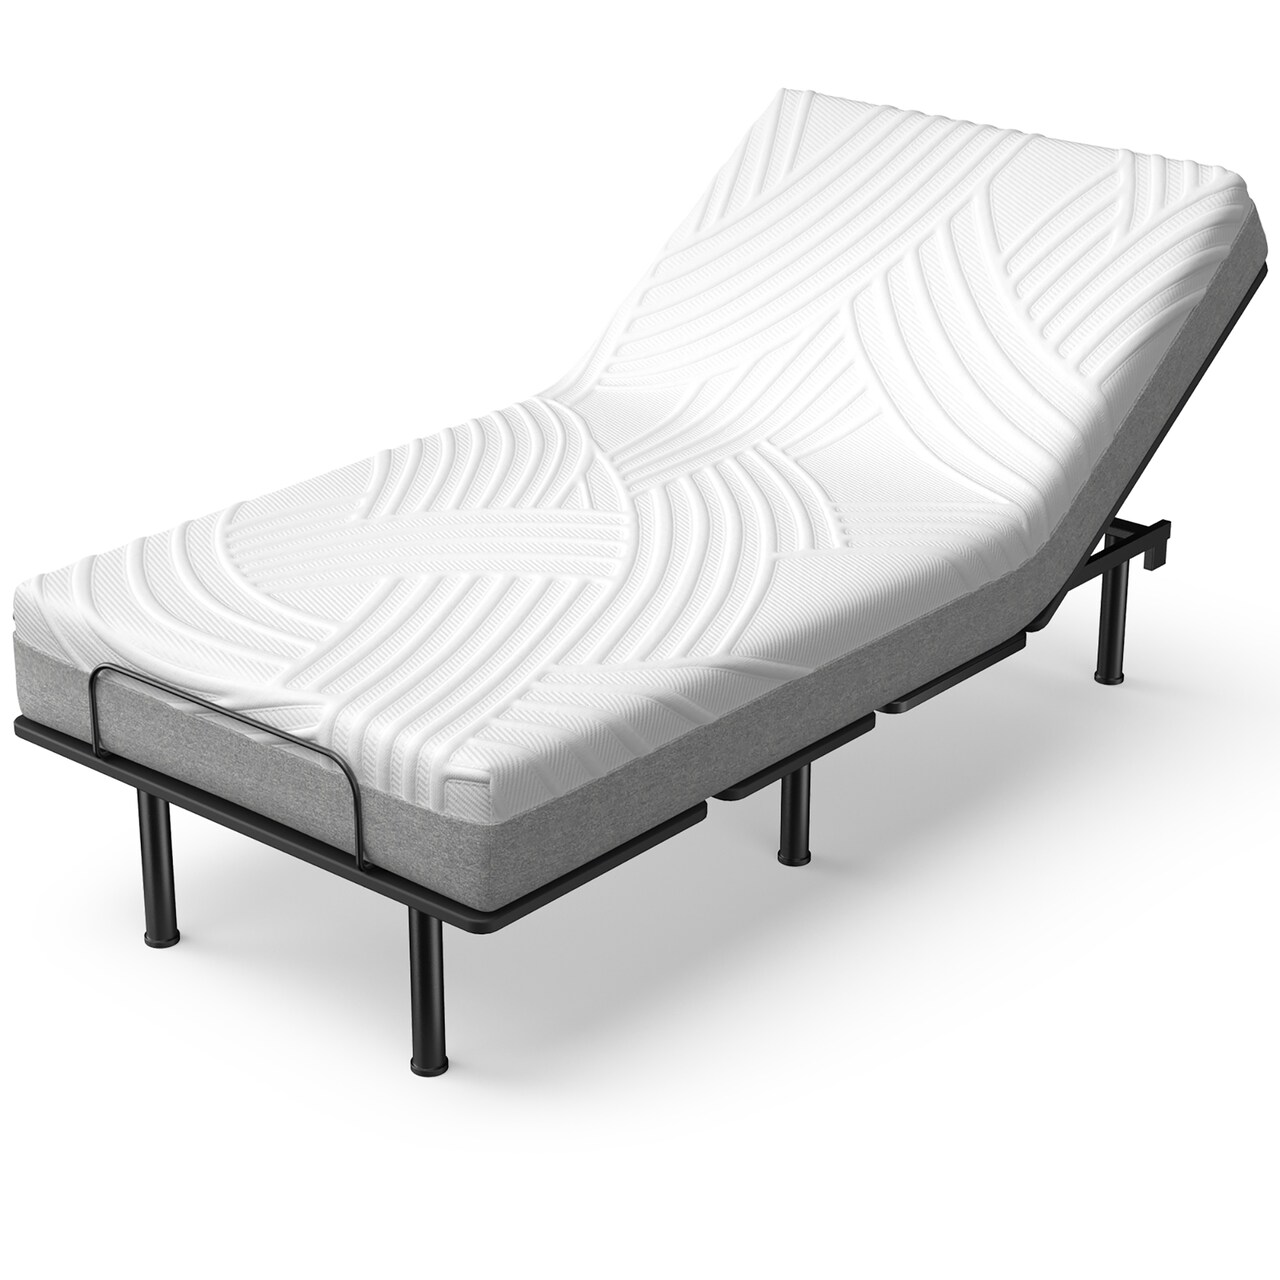 Costway 8 Inch Twin XL Bed Mattress Gel Memory Foam Convoluted Foam for Adjustable Bed